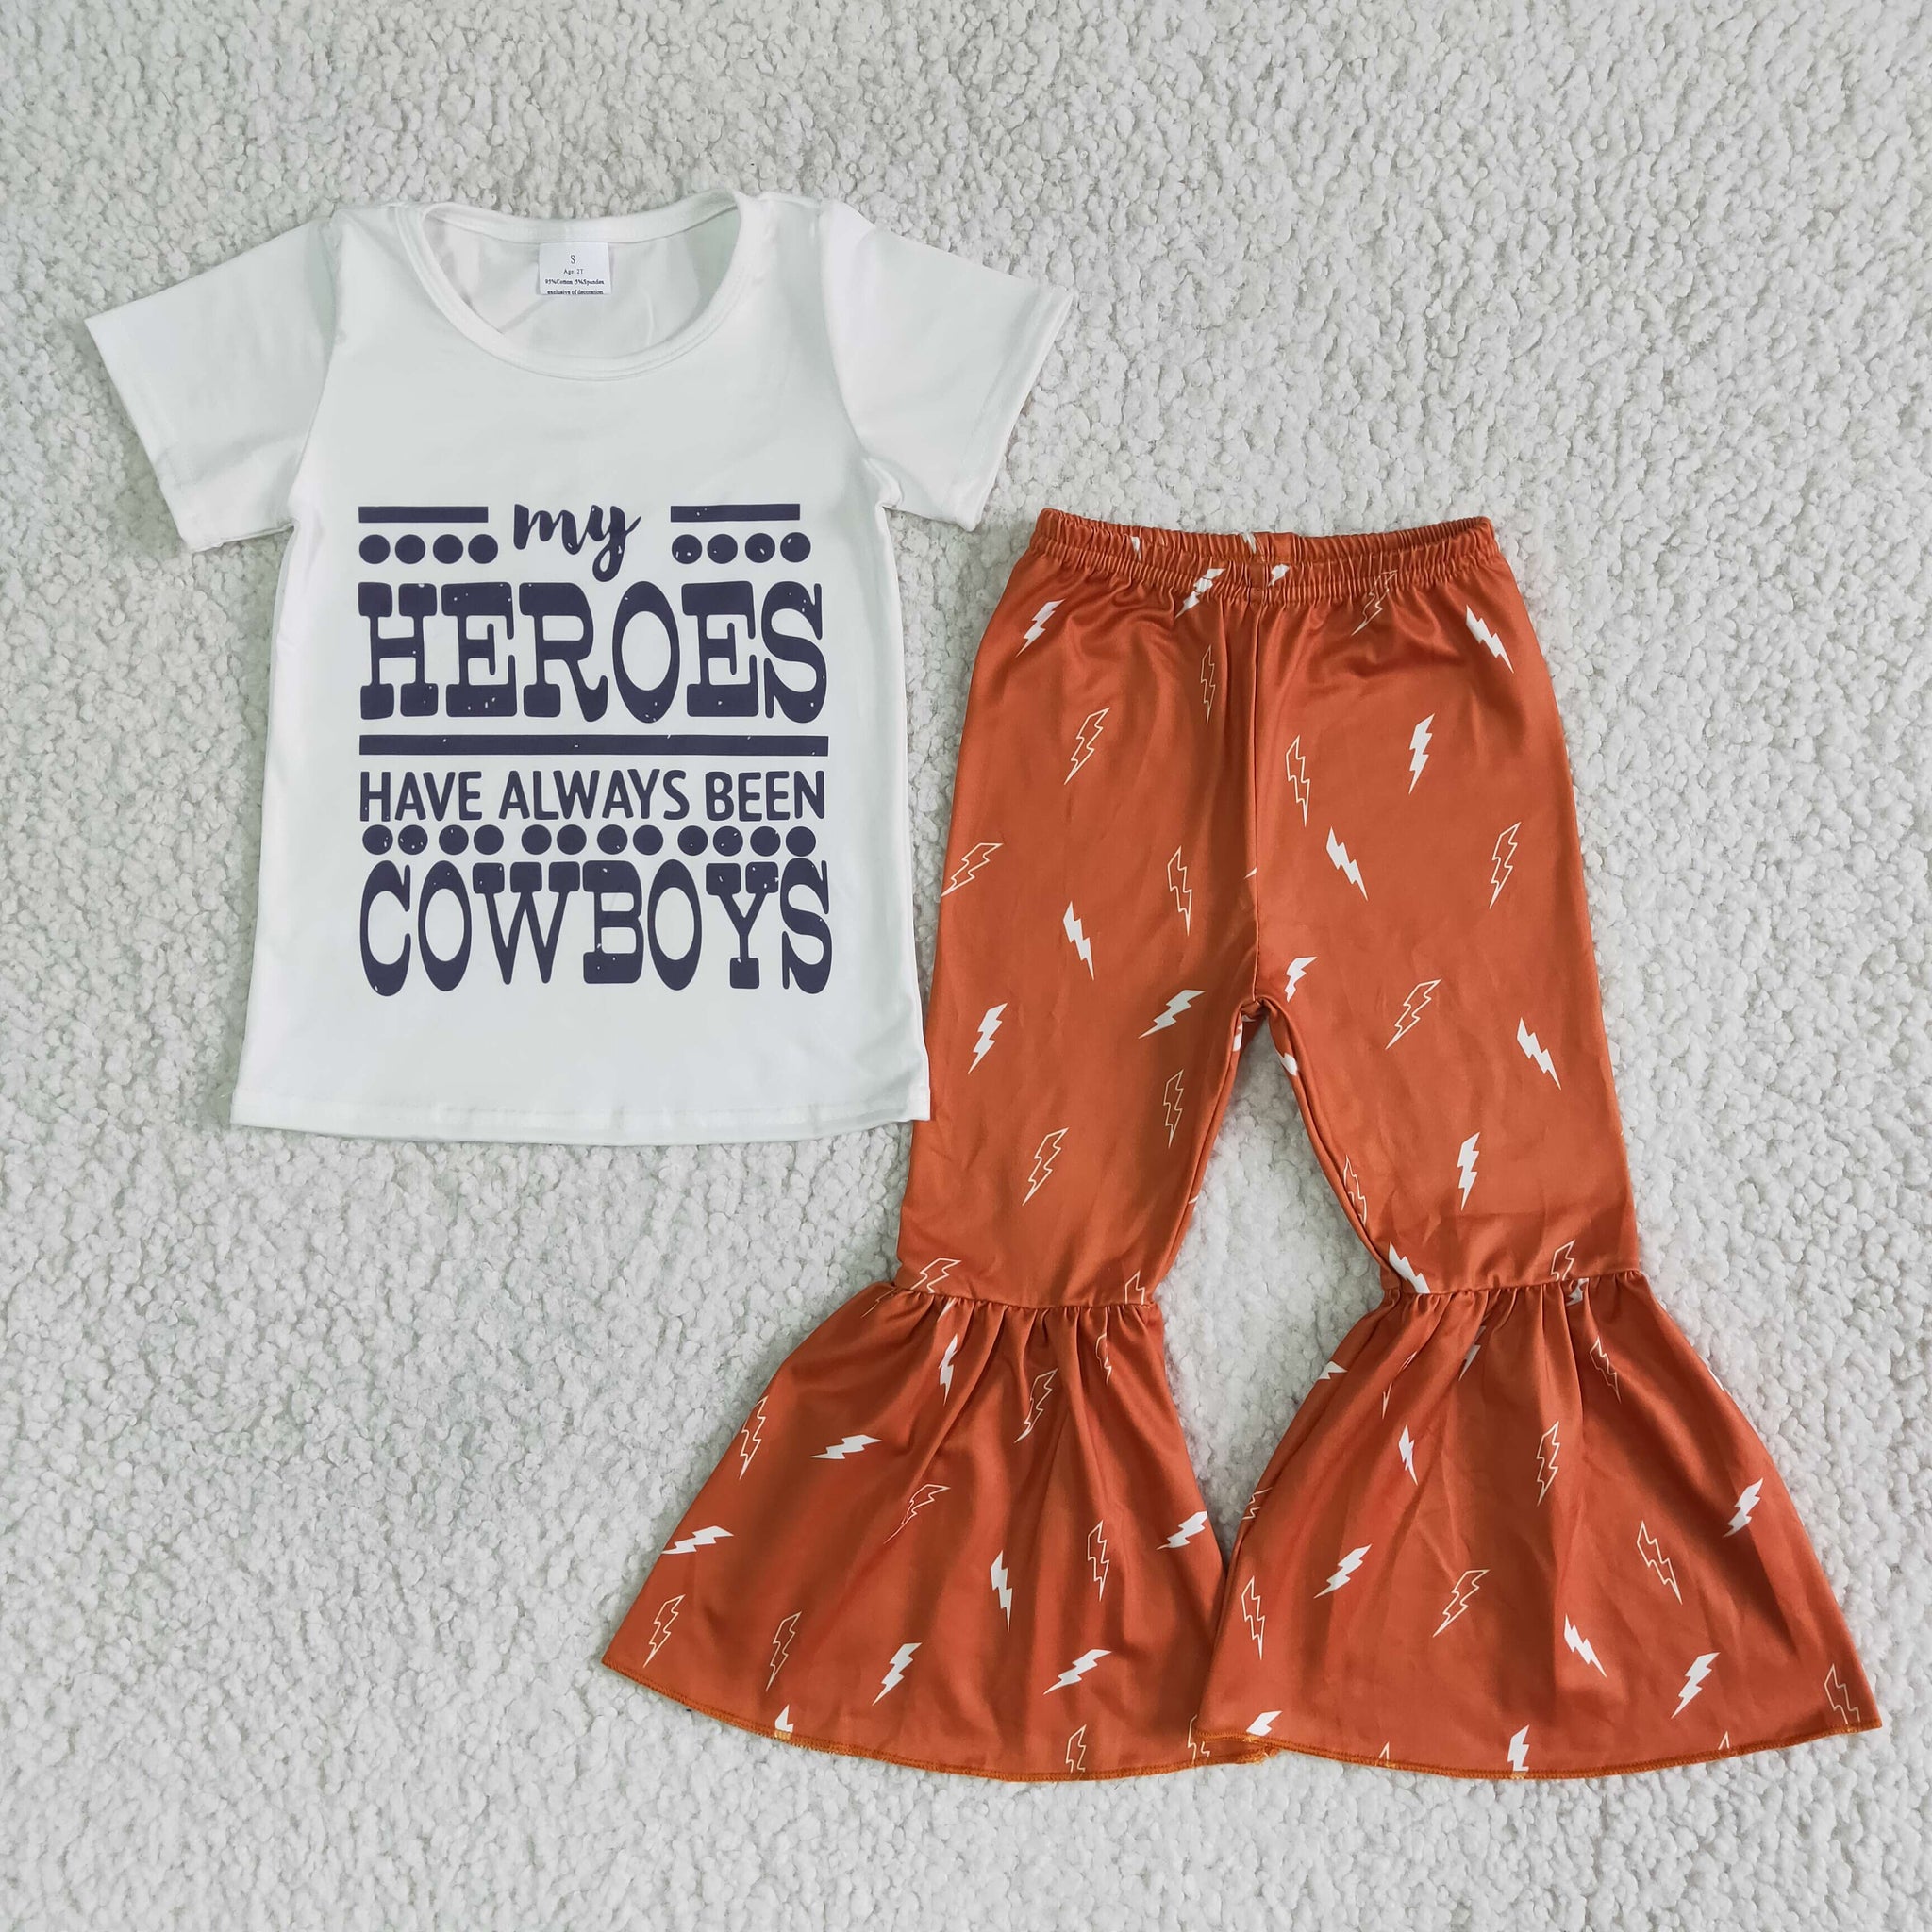 kids clothing heroes cowboys orange short sleeve fall spring set